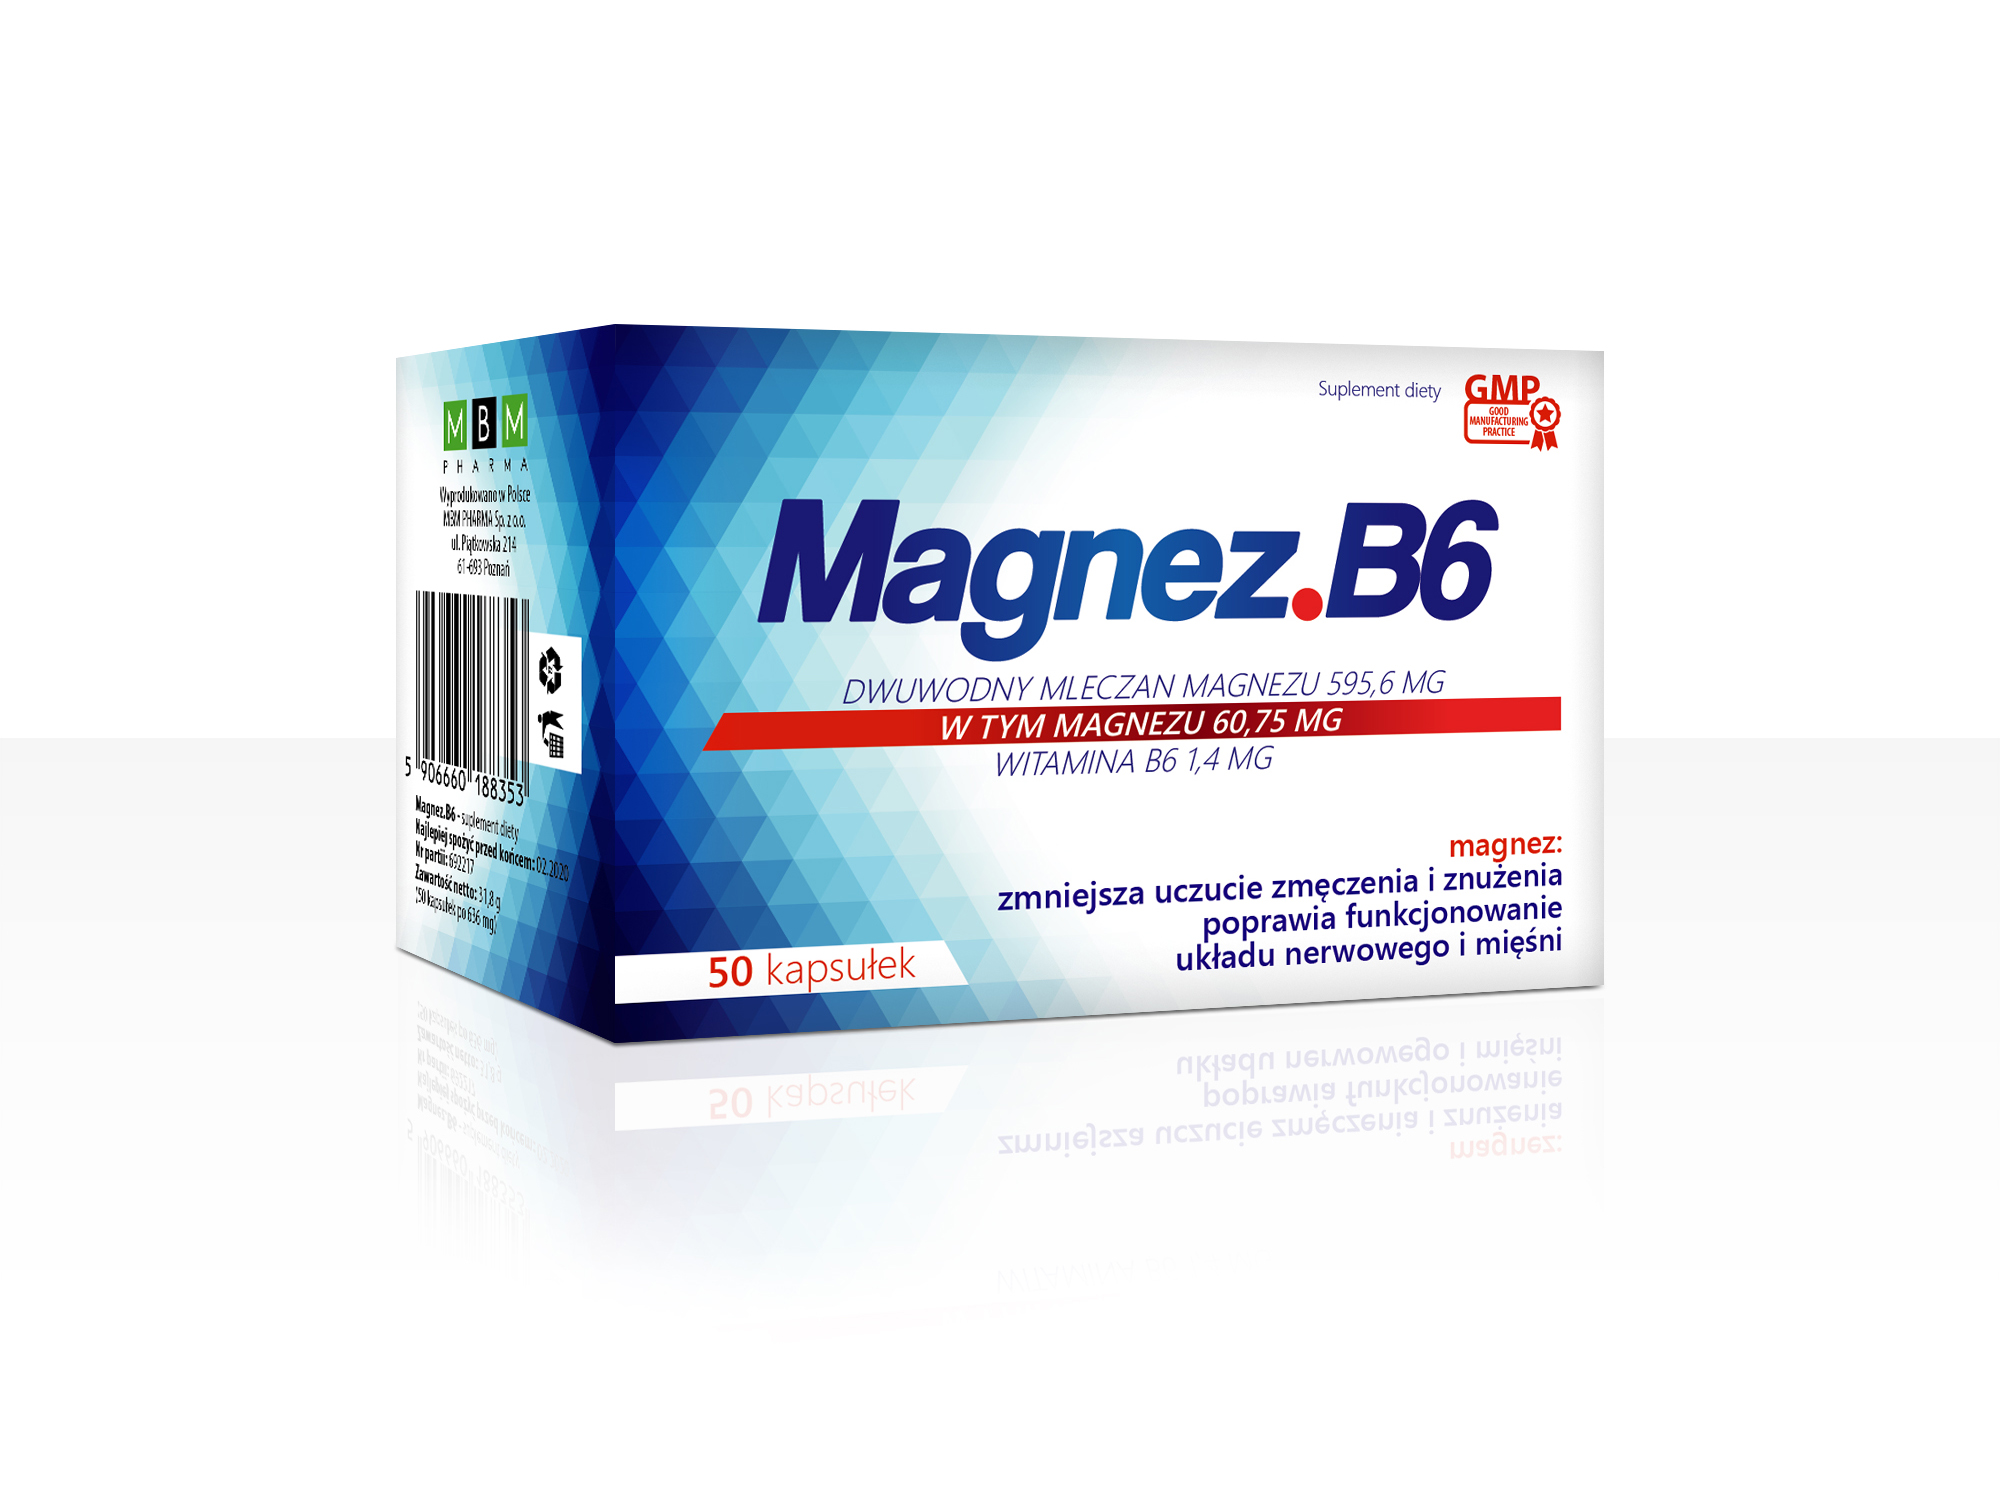 Magnez.B6